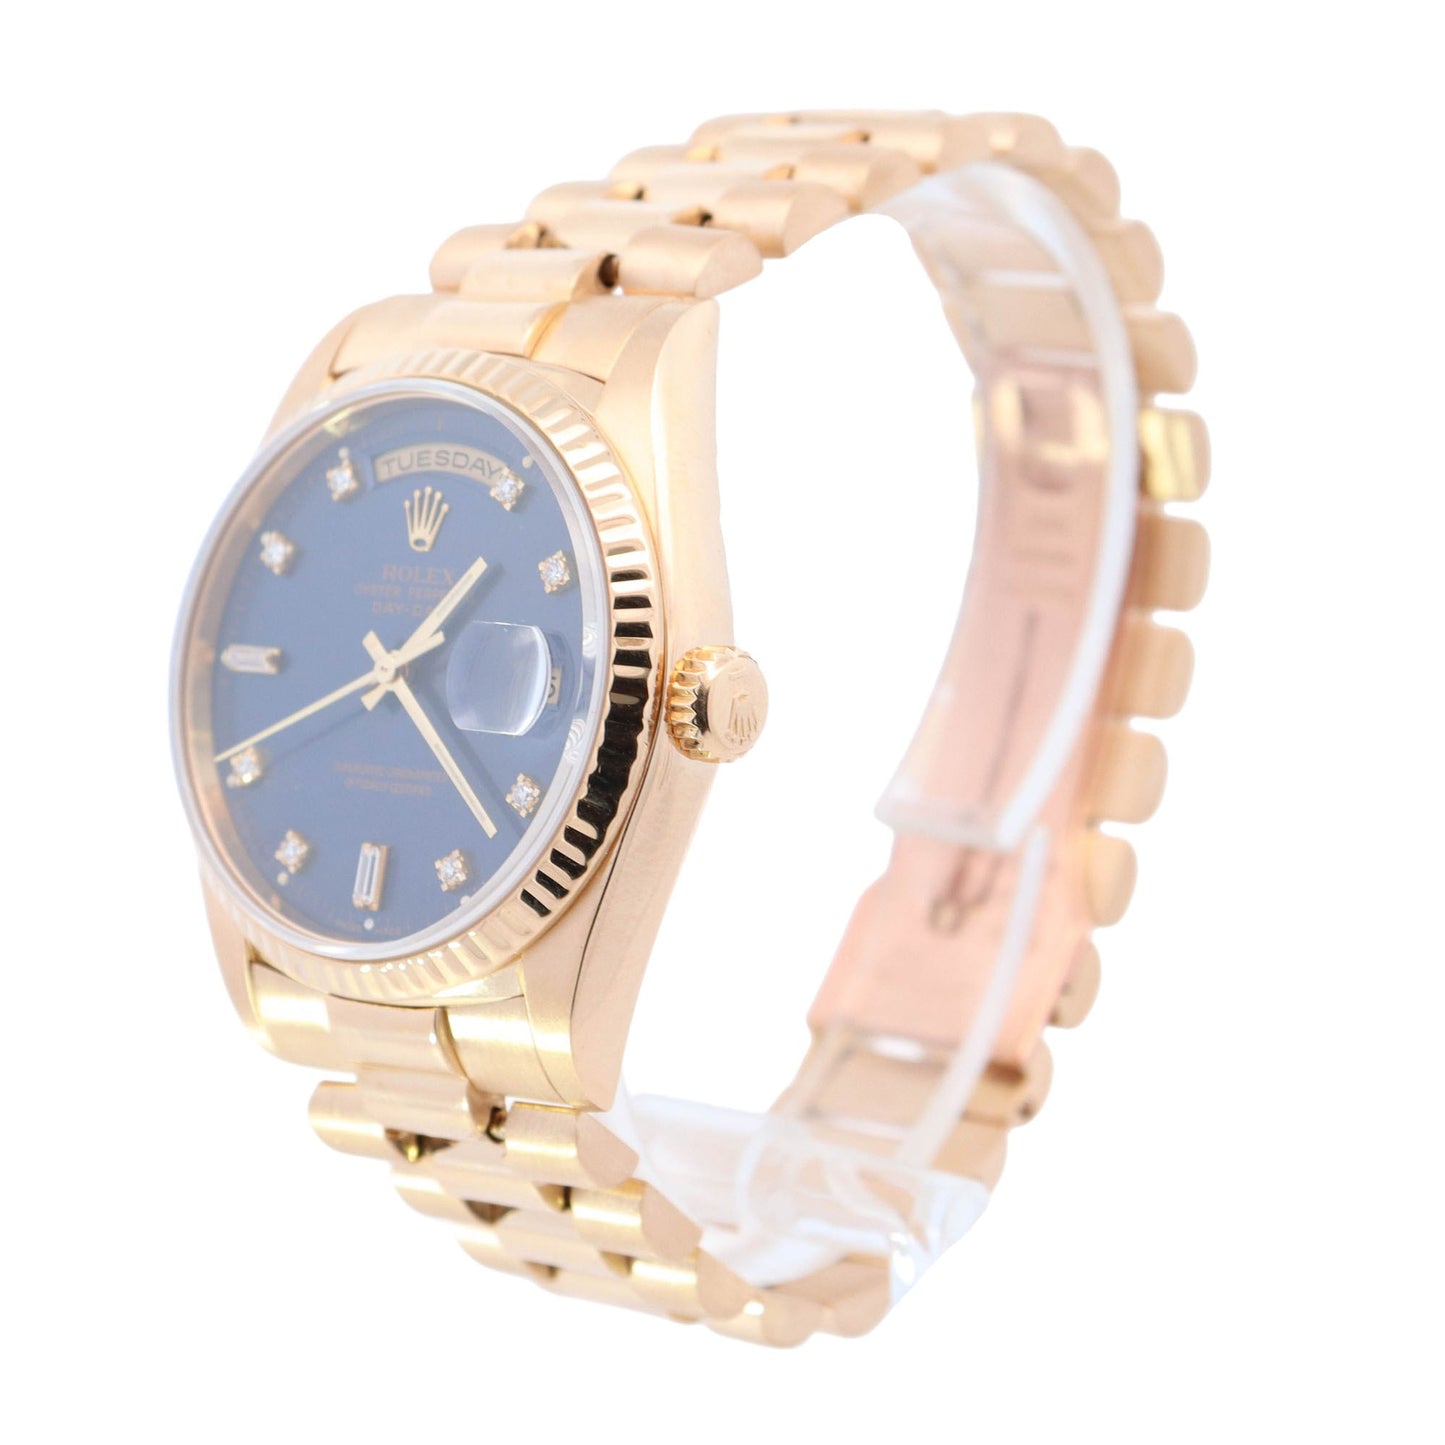 Rolex Day-Date Yellow Gold 36mm Custom Blue Diamond Dot Dial Watch Reference #: 18238 - Happy Jewelers Fine Jewelry Lifetime Warranty